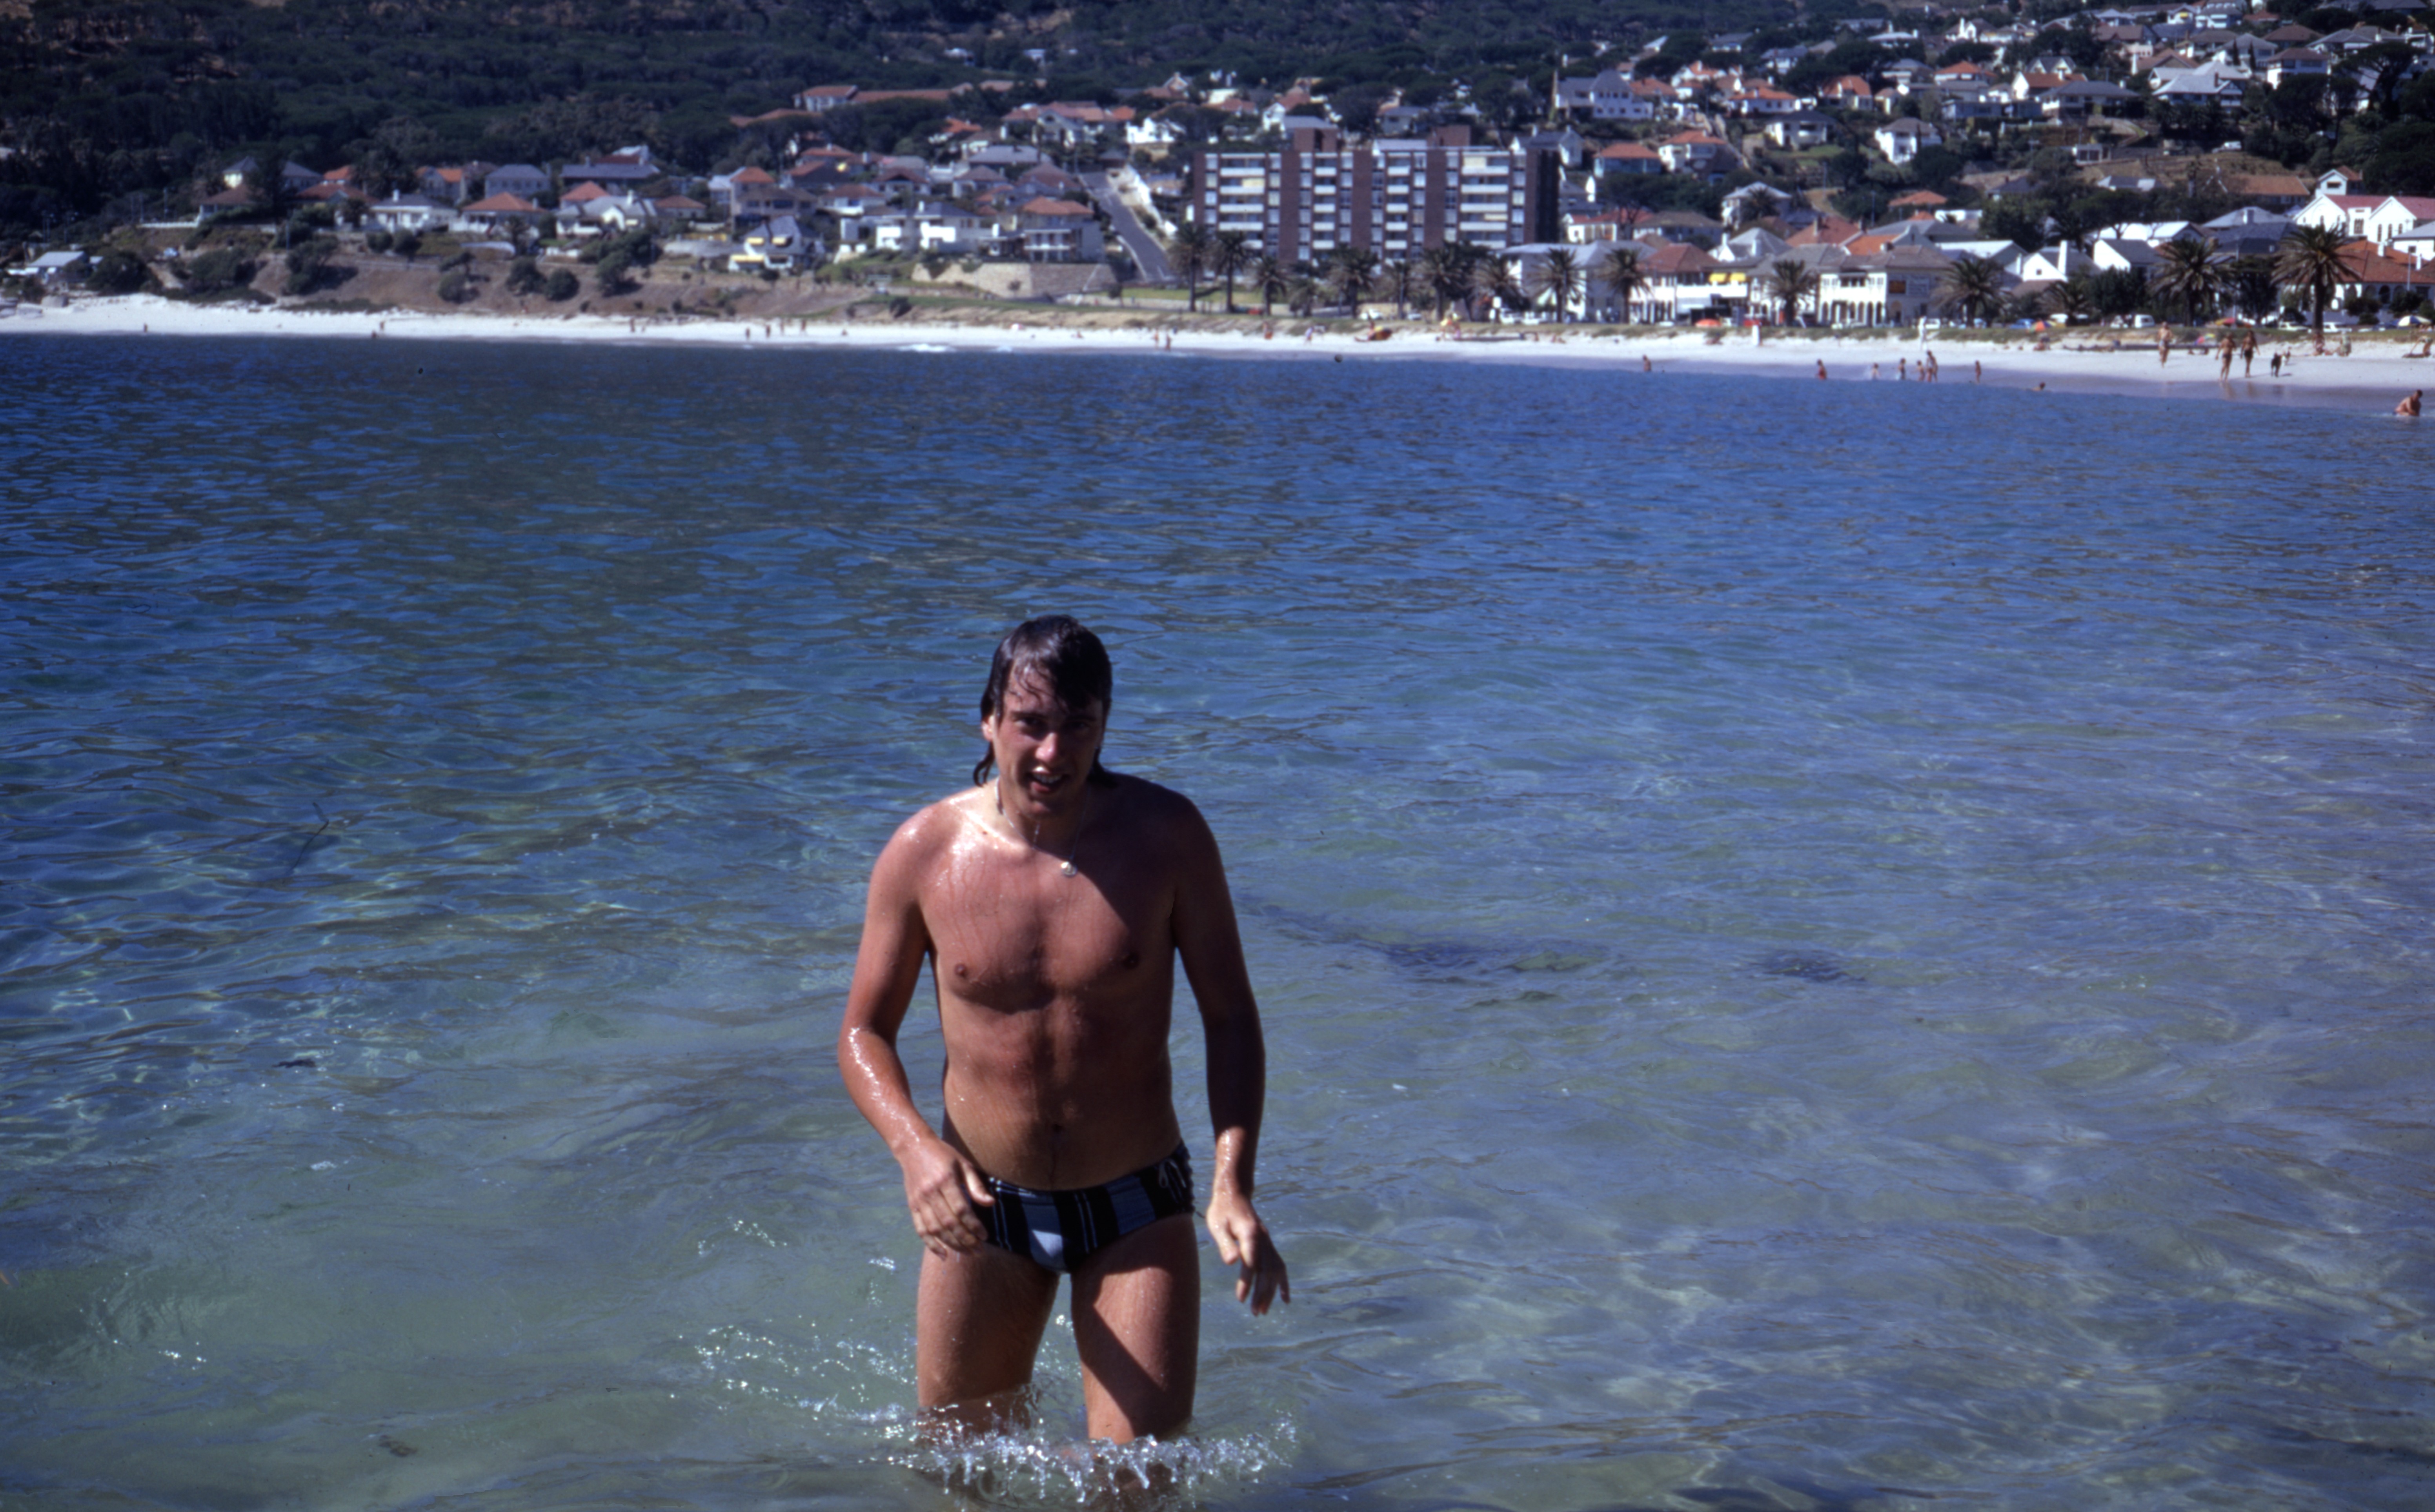 A youthful James Bond impersonator, February 1974